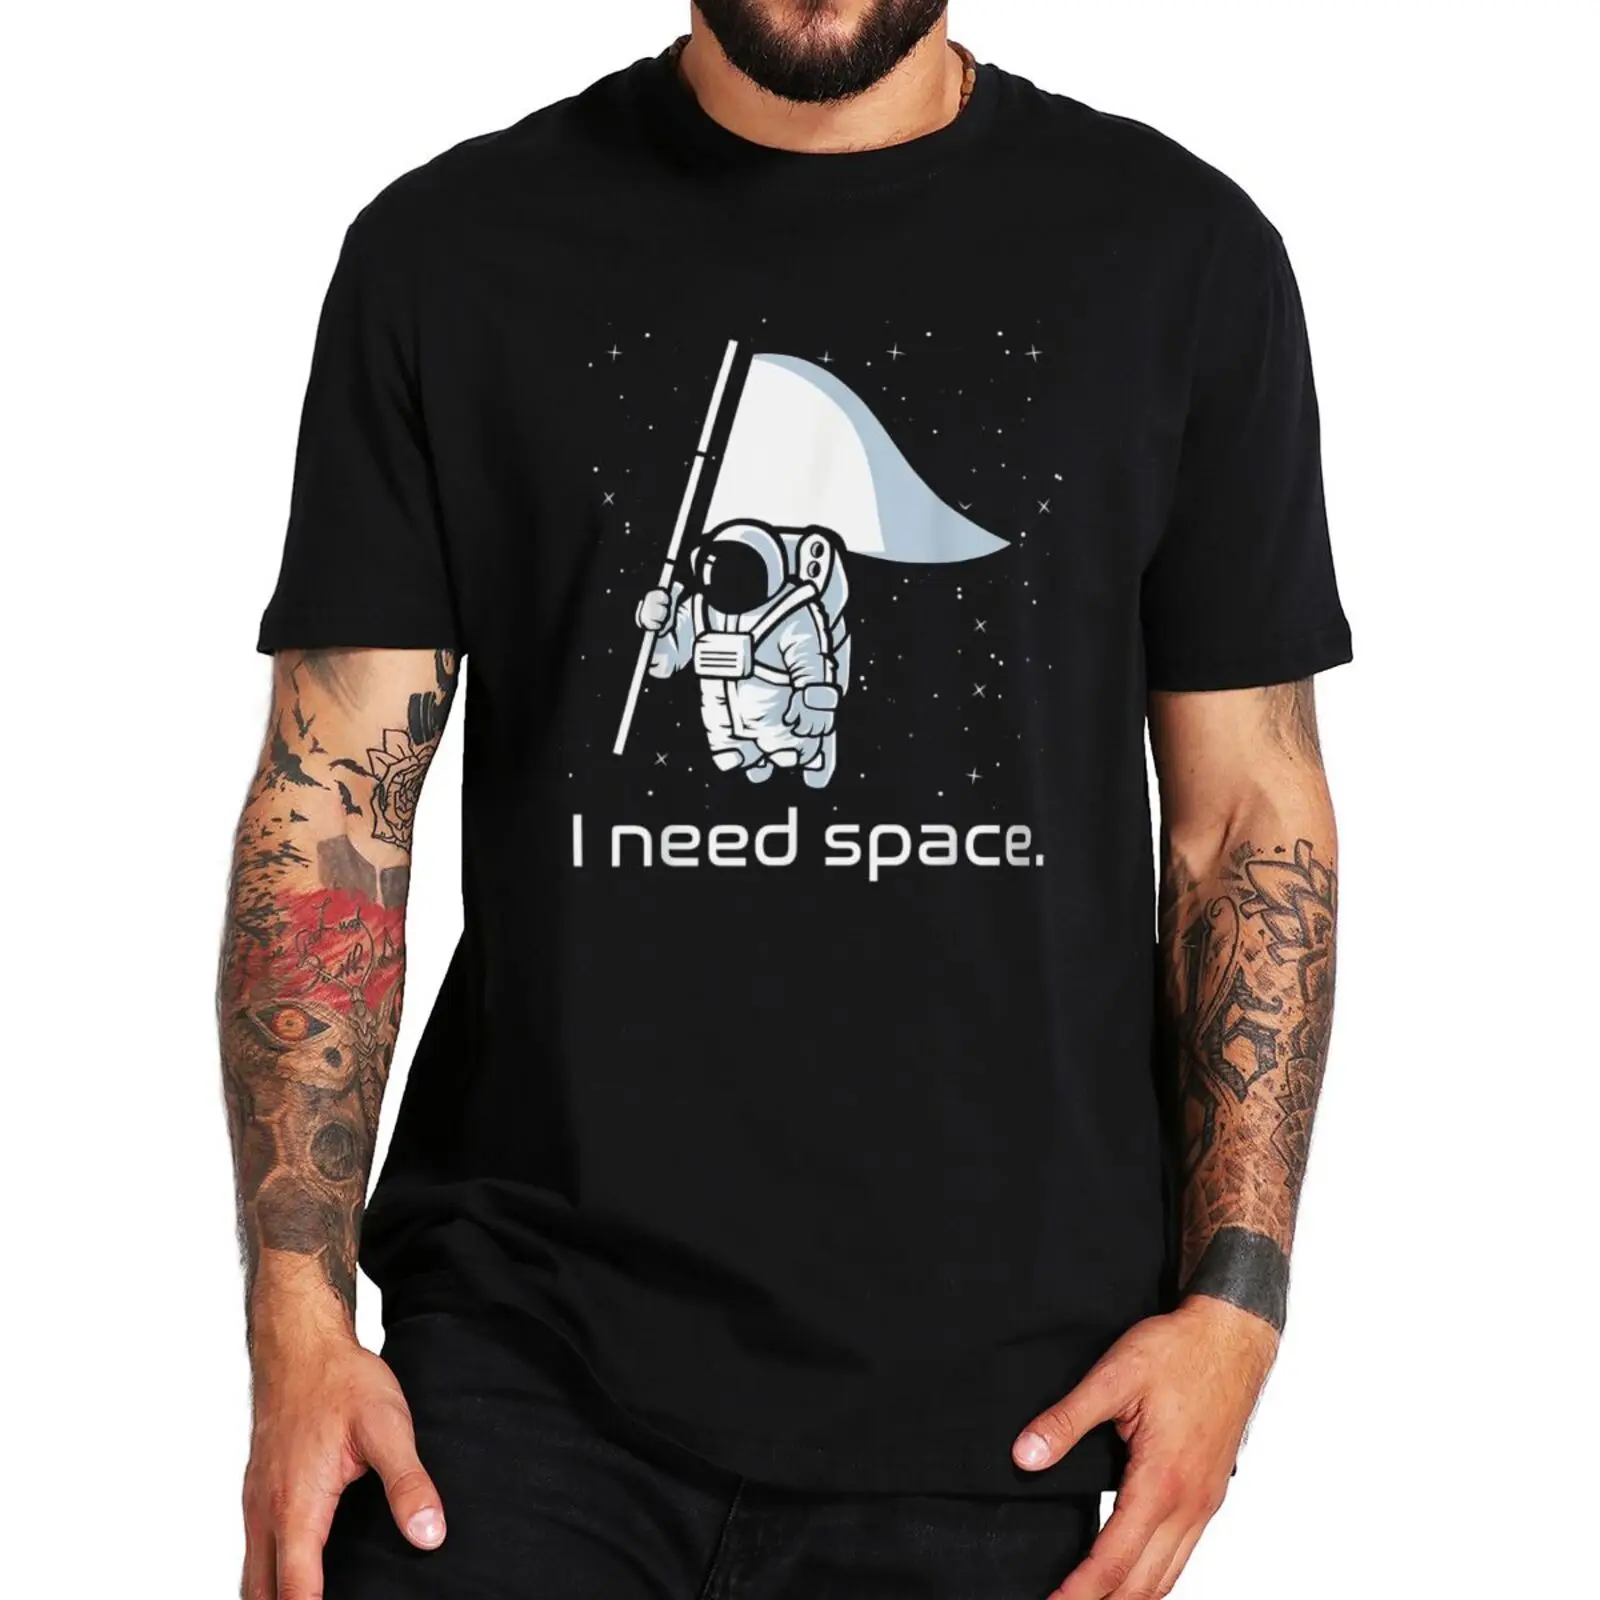 

I Need Space Funny T Shirt Galaxy Aerospace Astronaut Universe Humor Joke T-Shirt 100% Cotton Oversize Homme Camiseta